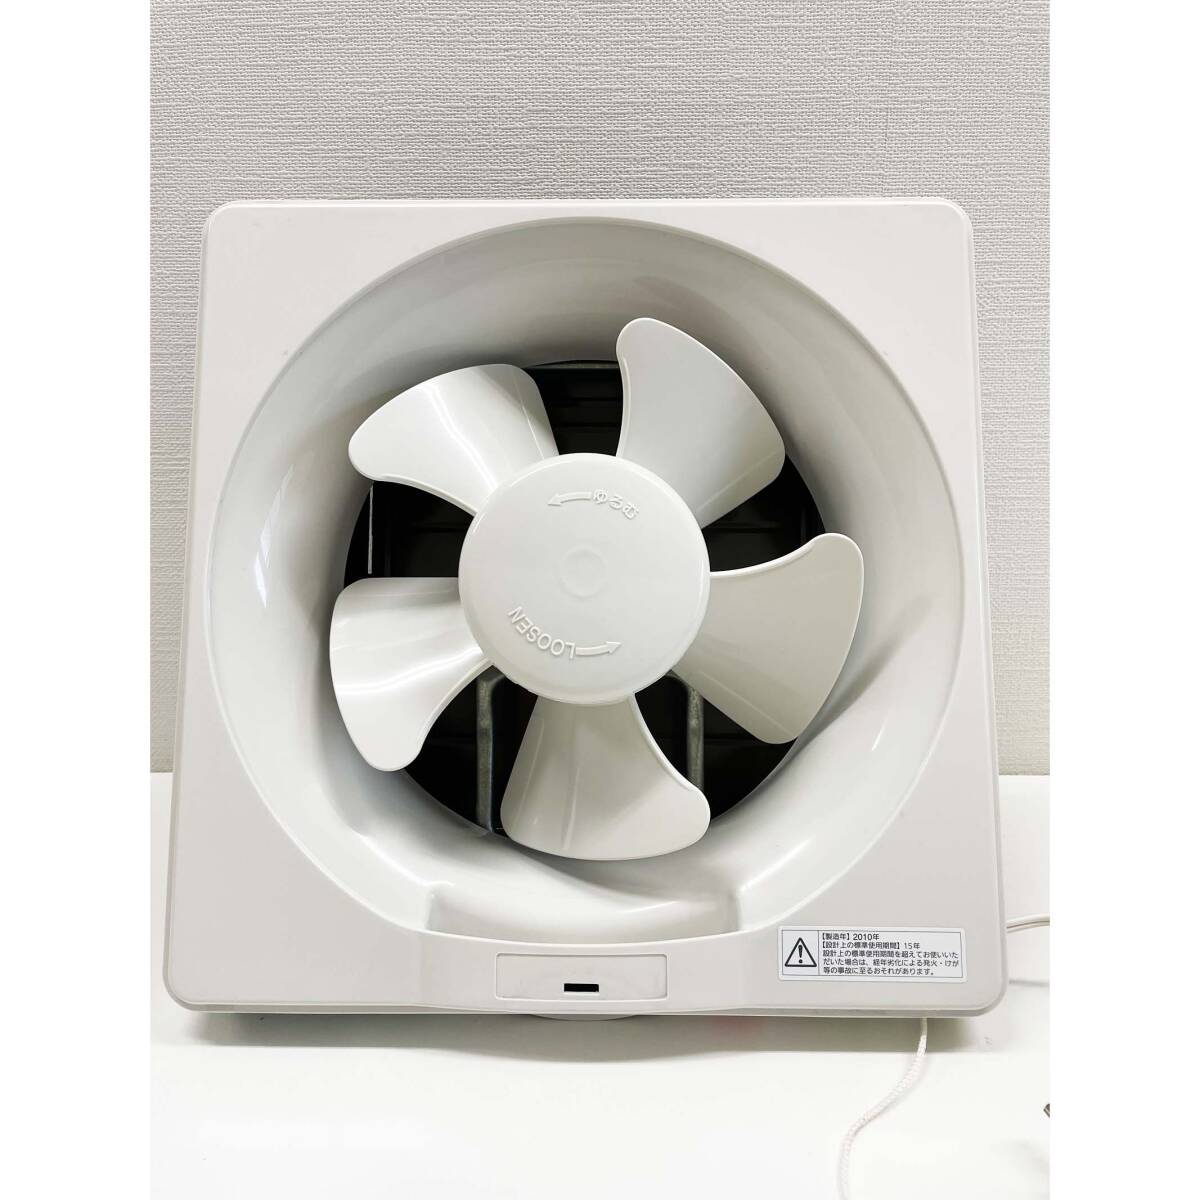  Panasonic (Panasonic) exhaust fan (20cm) FY-20TH1